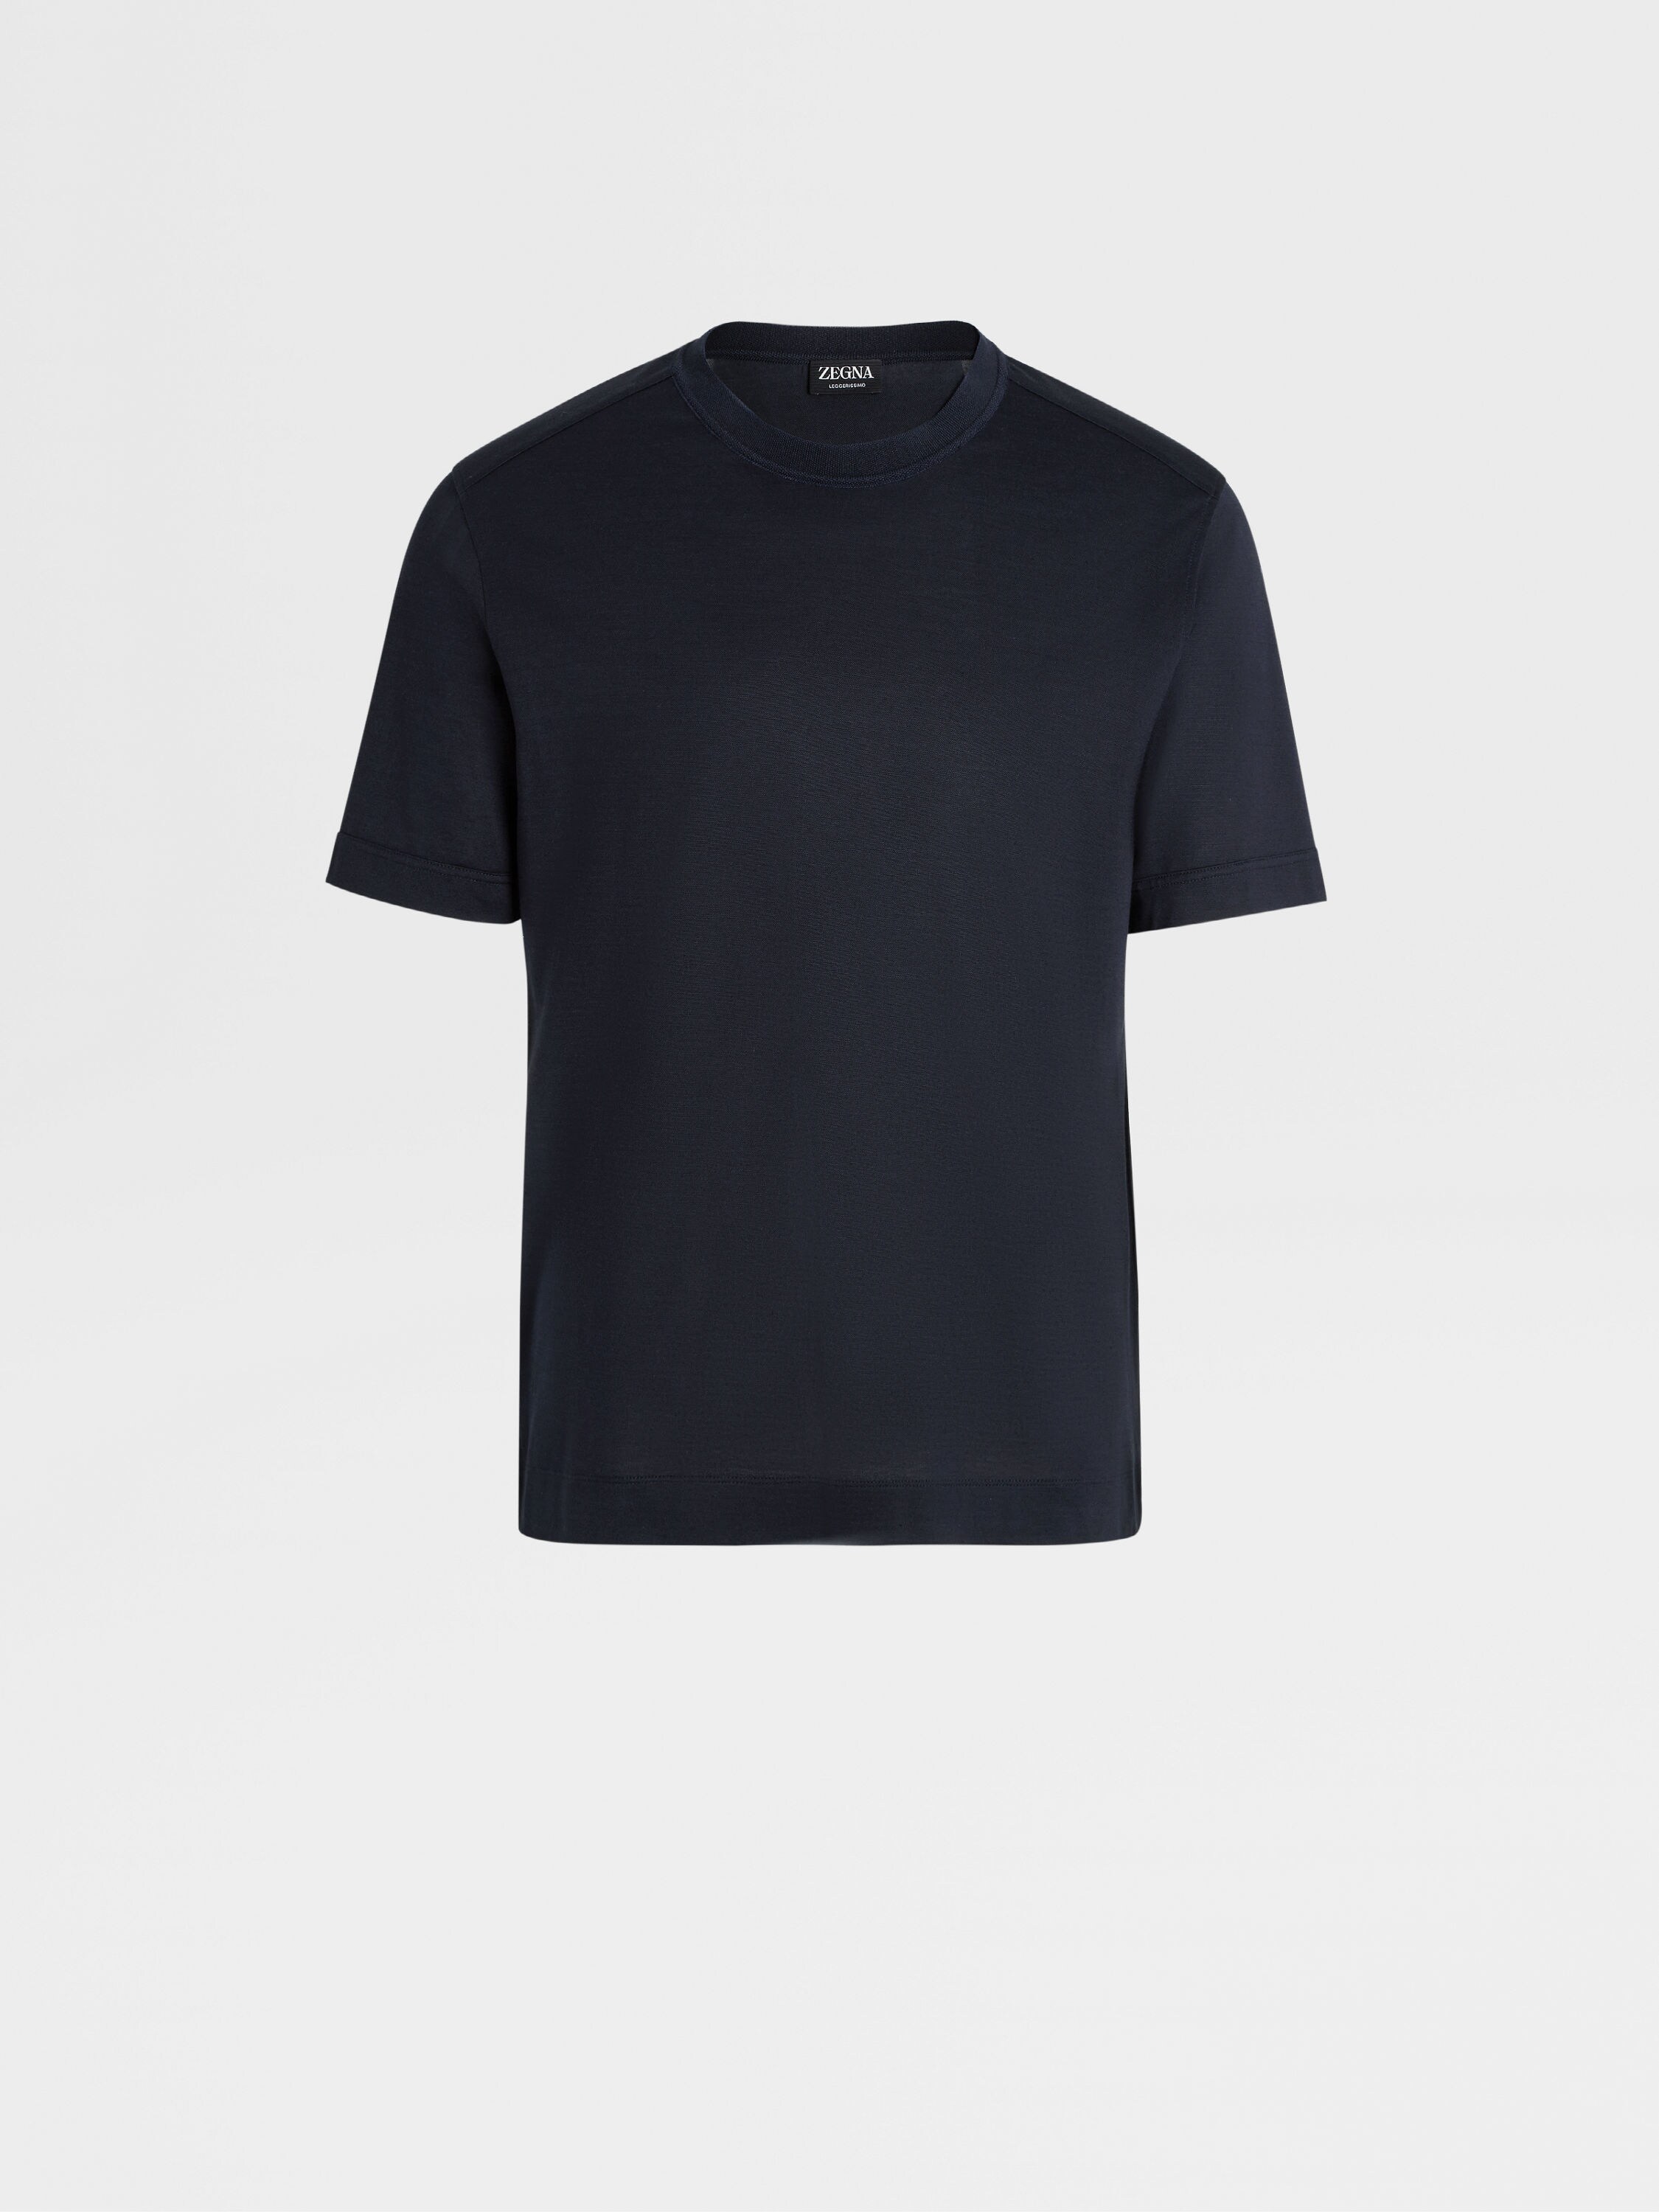 Navy Blue Leggerissimo Cotton and Silk T-shirt